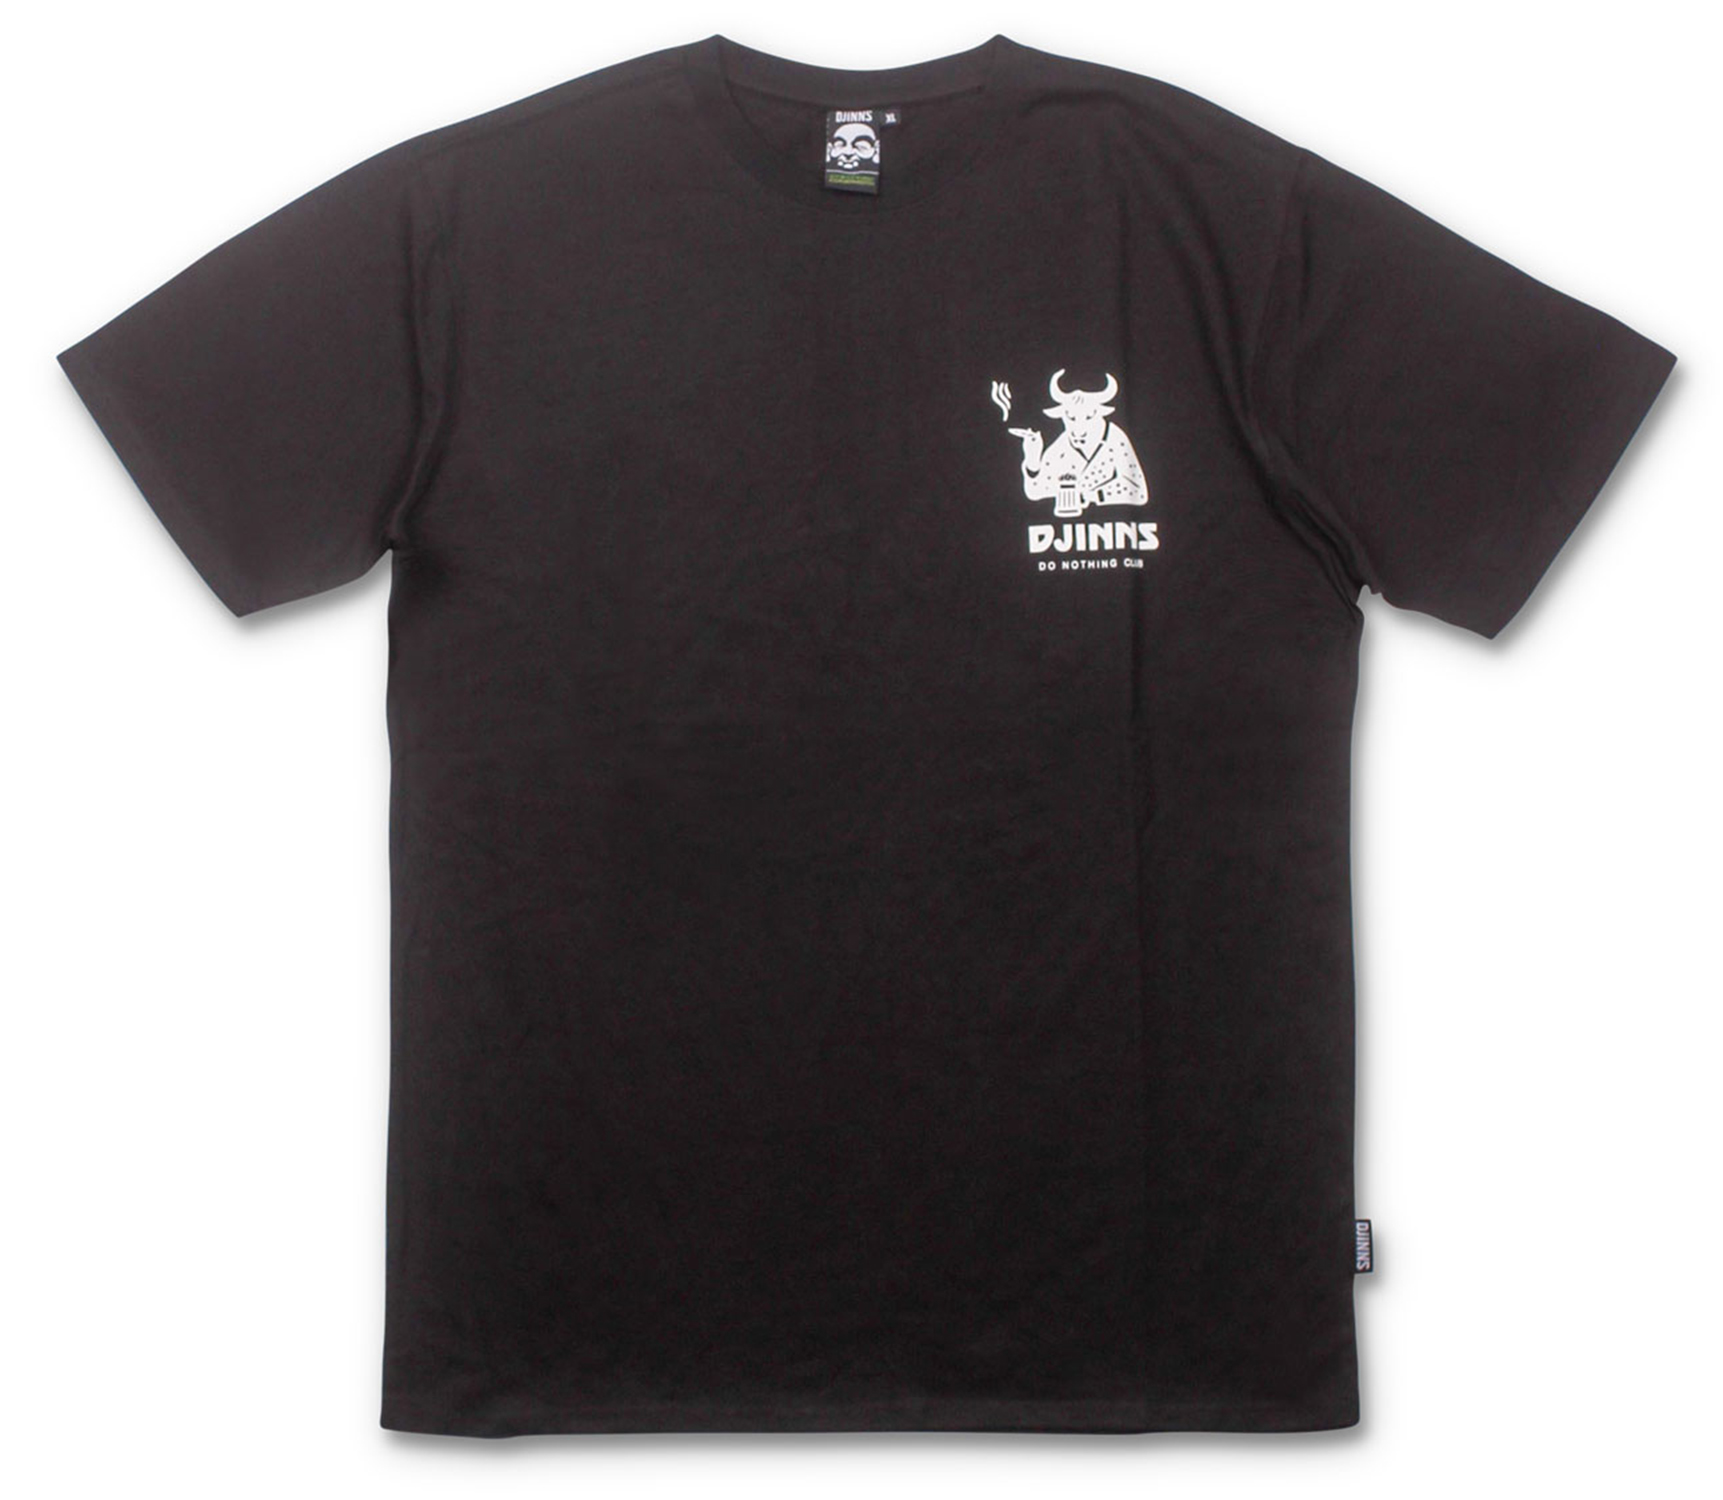 Djinns Cheered Bull T-Shirt Black 24257